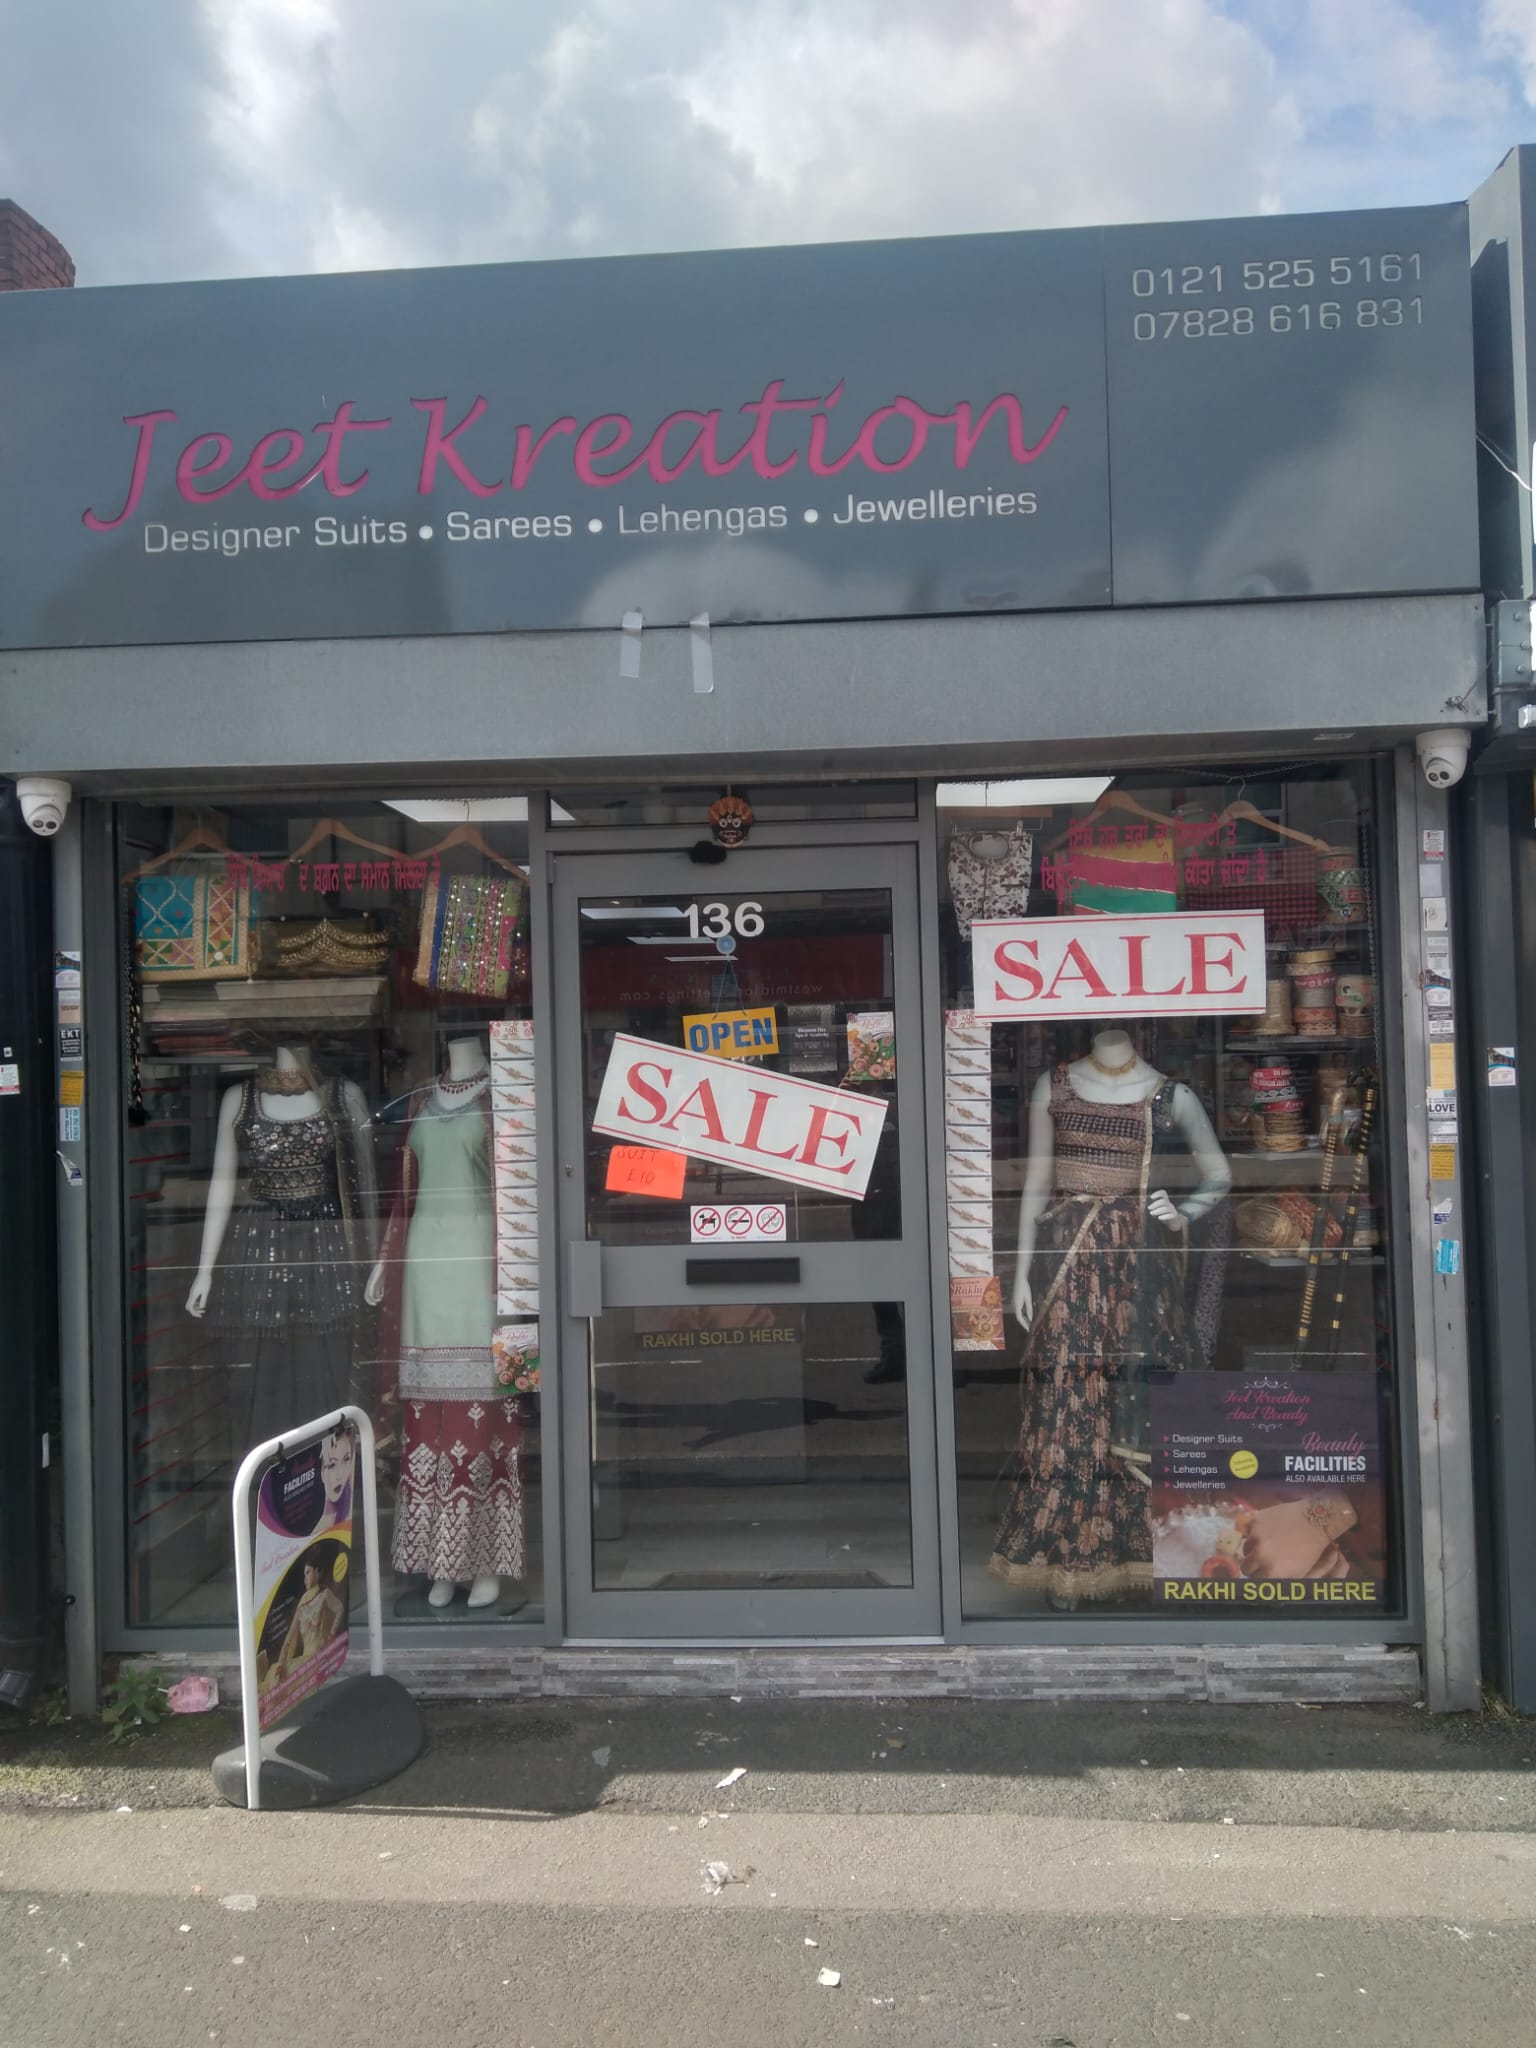 Jeet Kreation West Bromwich,136 High Street offering new treatments